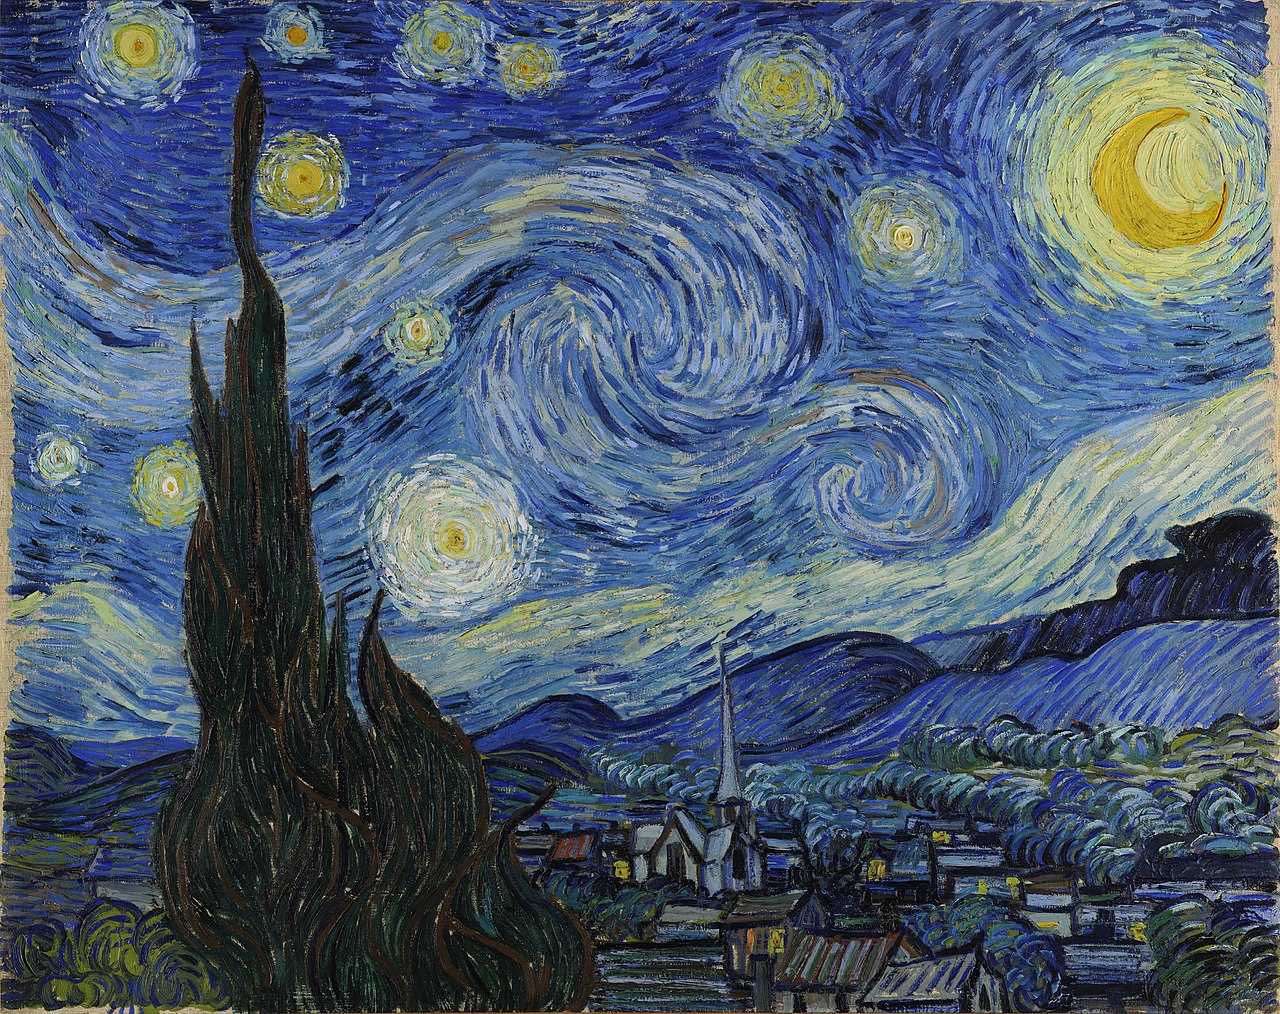 Vincent van Gogh, The Starry Night, 1889, Museum of Modern Art, New York City